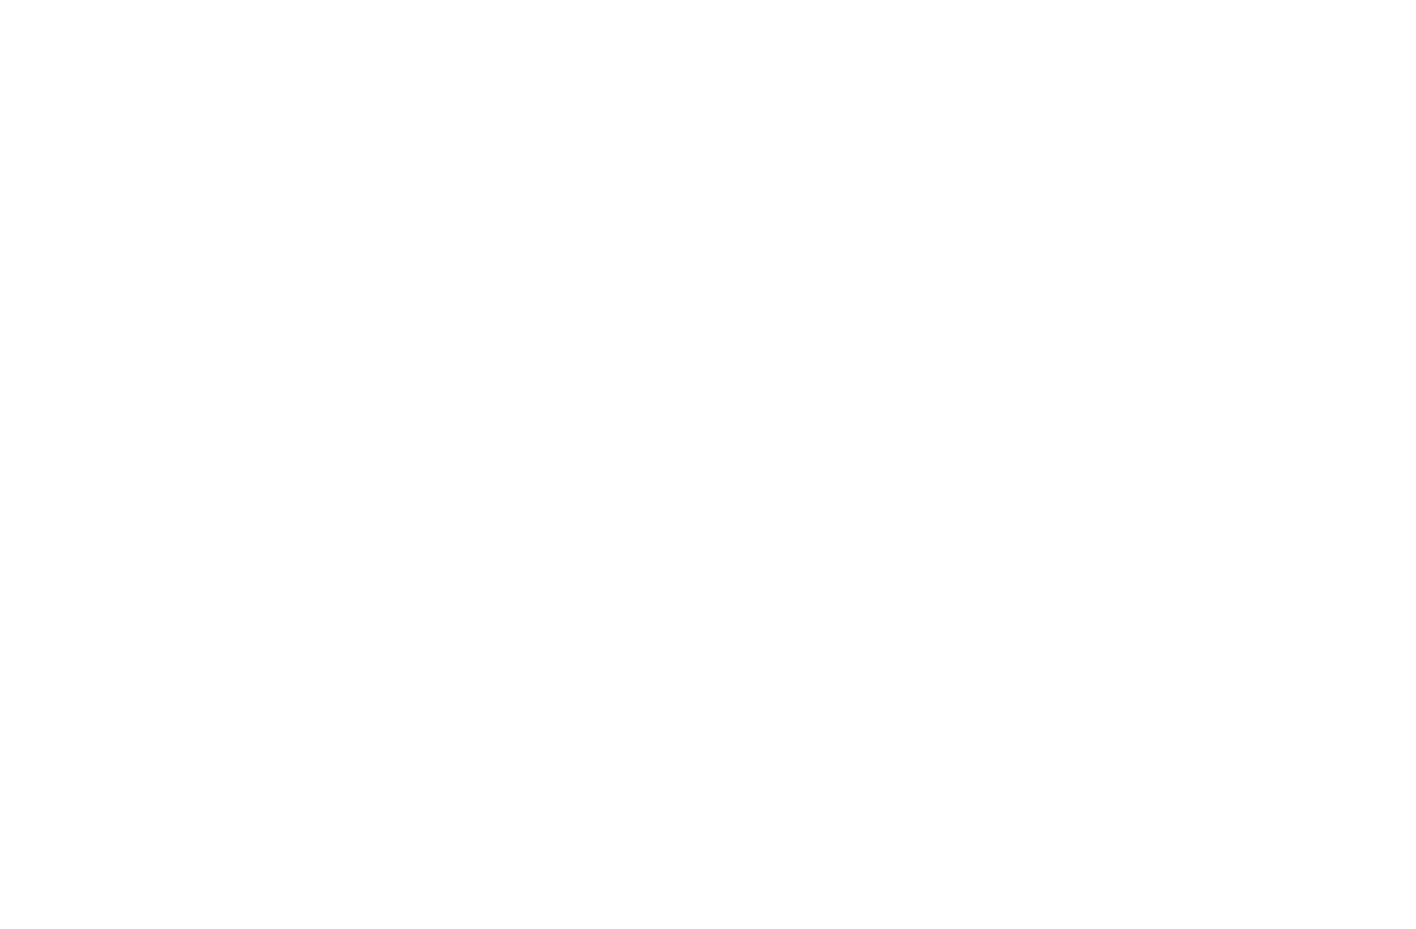 independent insurance agent emblem